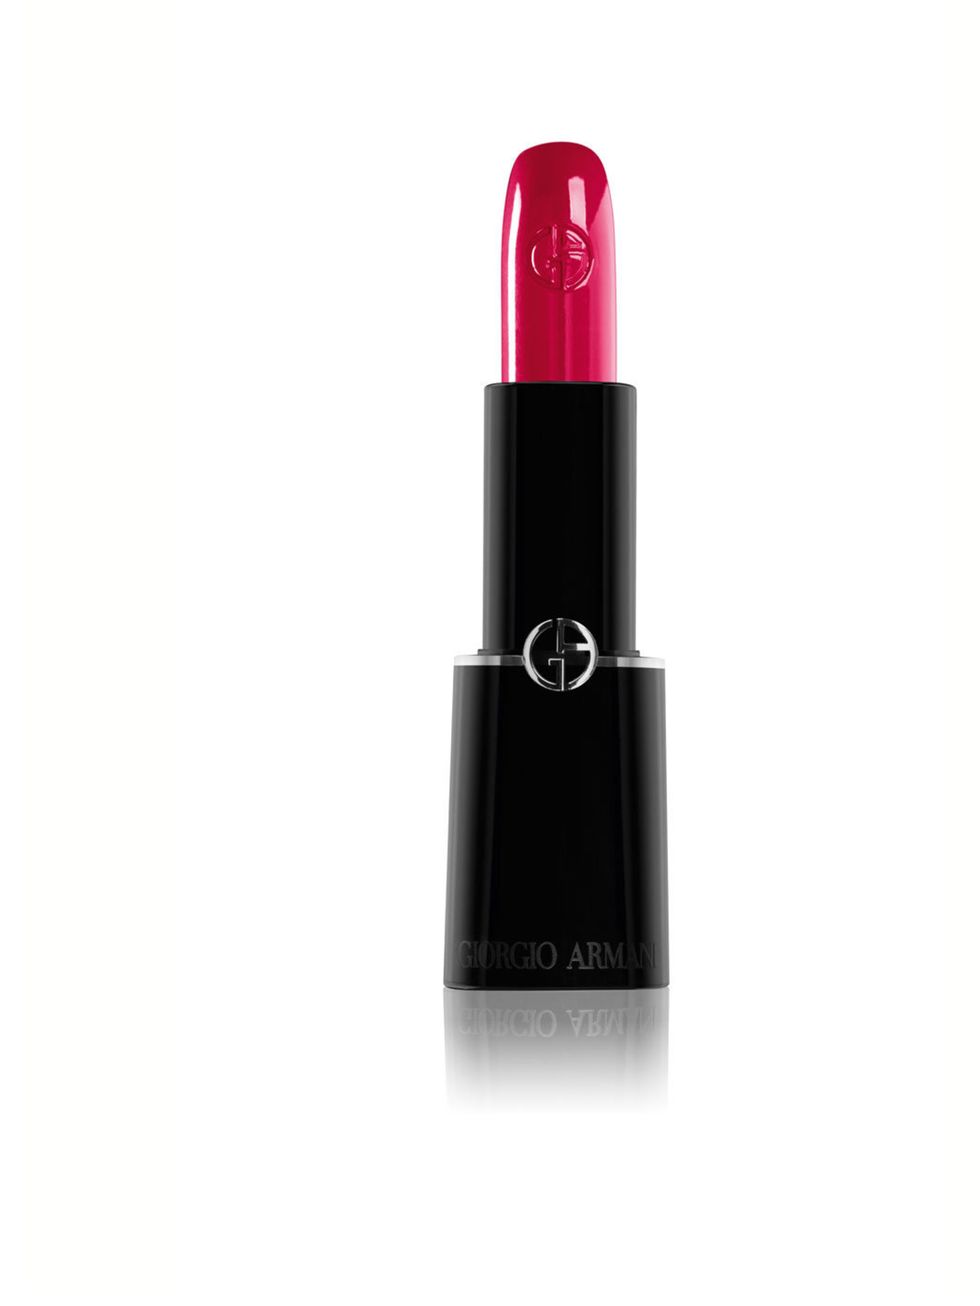 <p>A moisturising balm texture and gloss-like finish; imparts the subtlest hint of fresh colour.<em>Giorgio Armani Rouge dArmani Sheer Lipstick, £25 at <a href="http://www.selfridges.com/en/Beauty/Brand-rooms/Designer/GIORGIO-ARMANI/Make-up/Rouge-dArmani